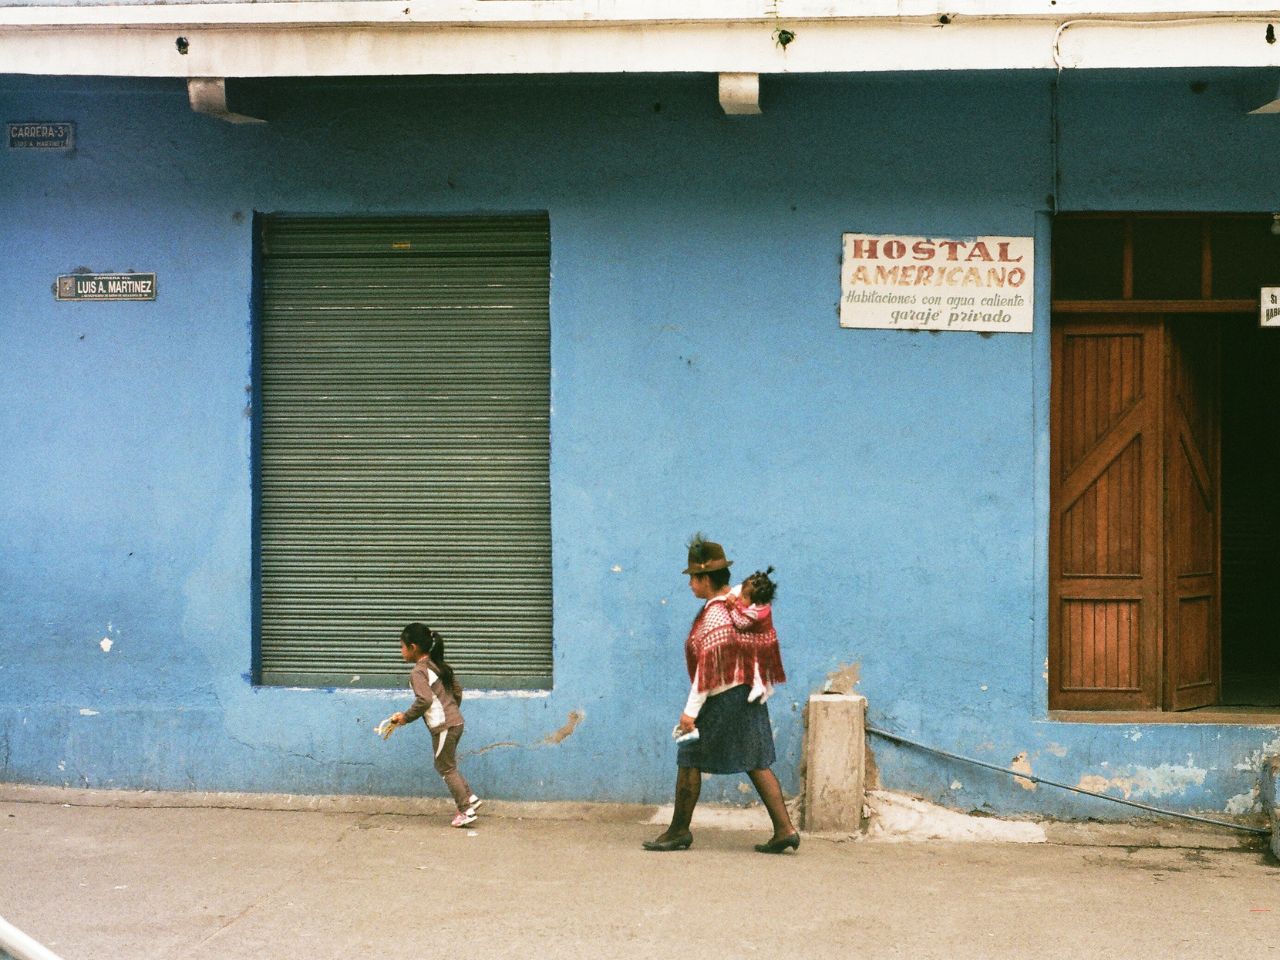 Mom and kids walking down a street in Honduras.